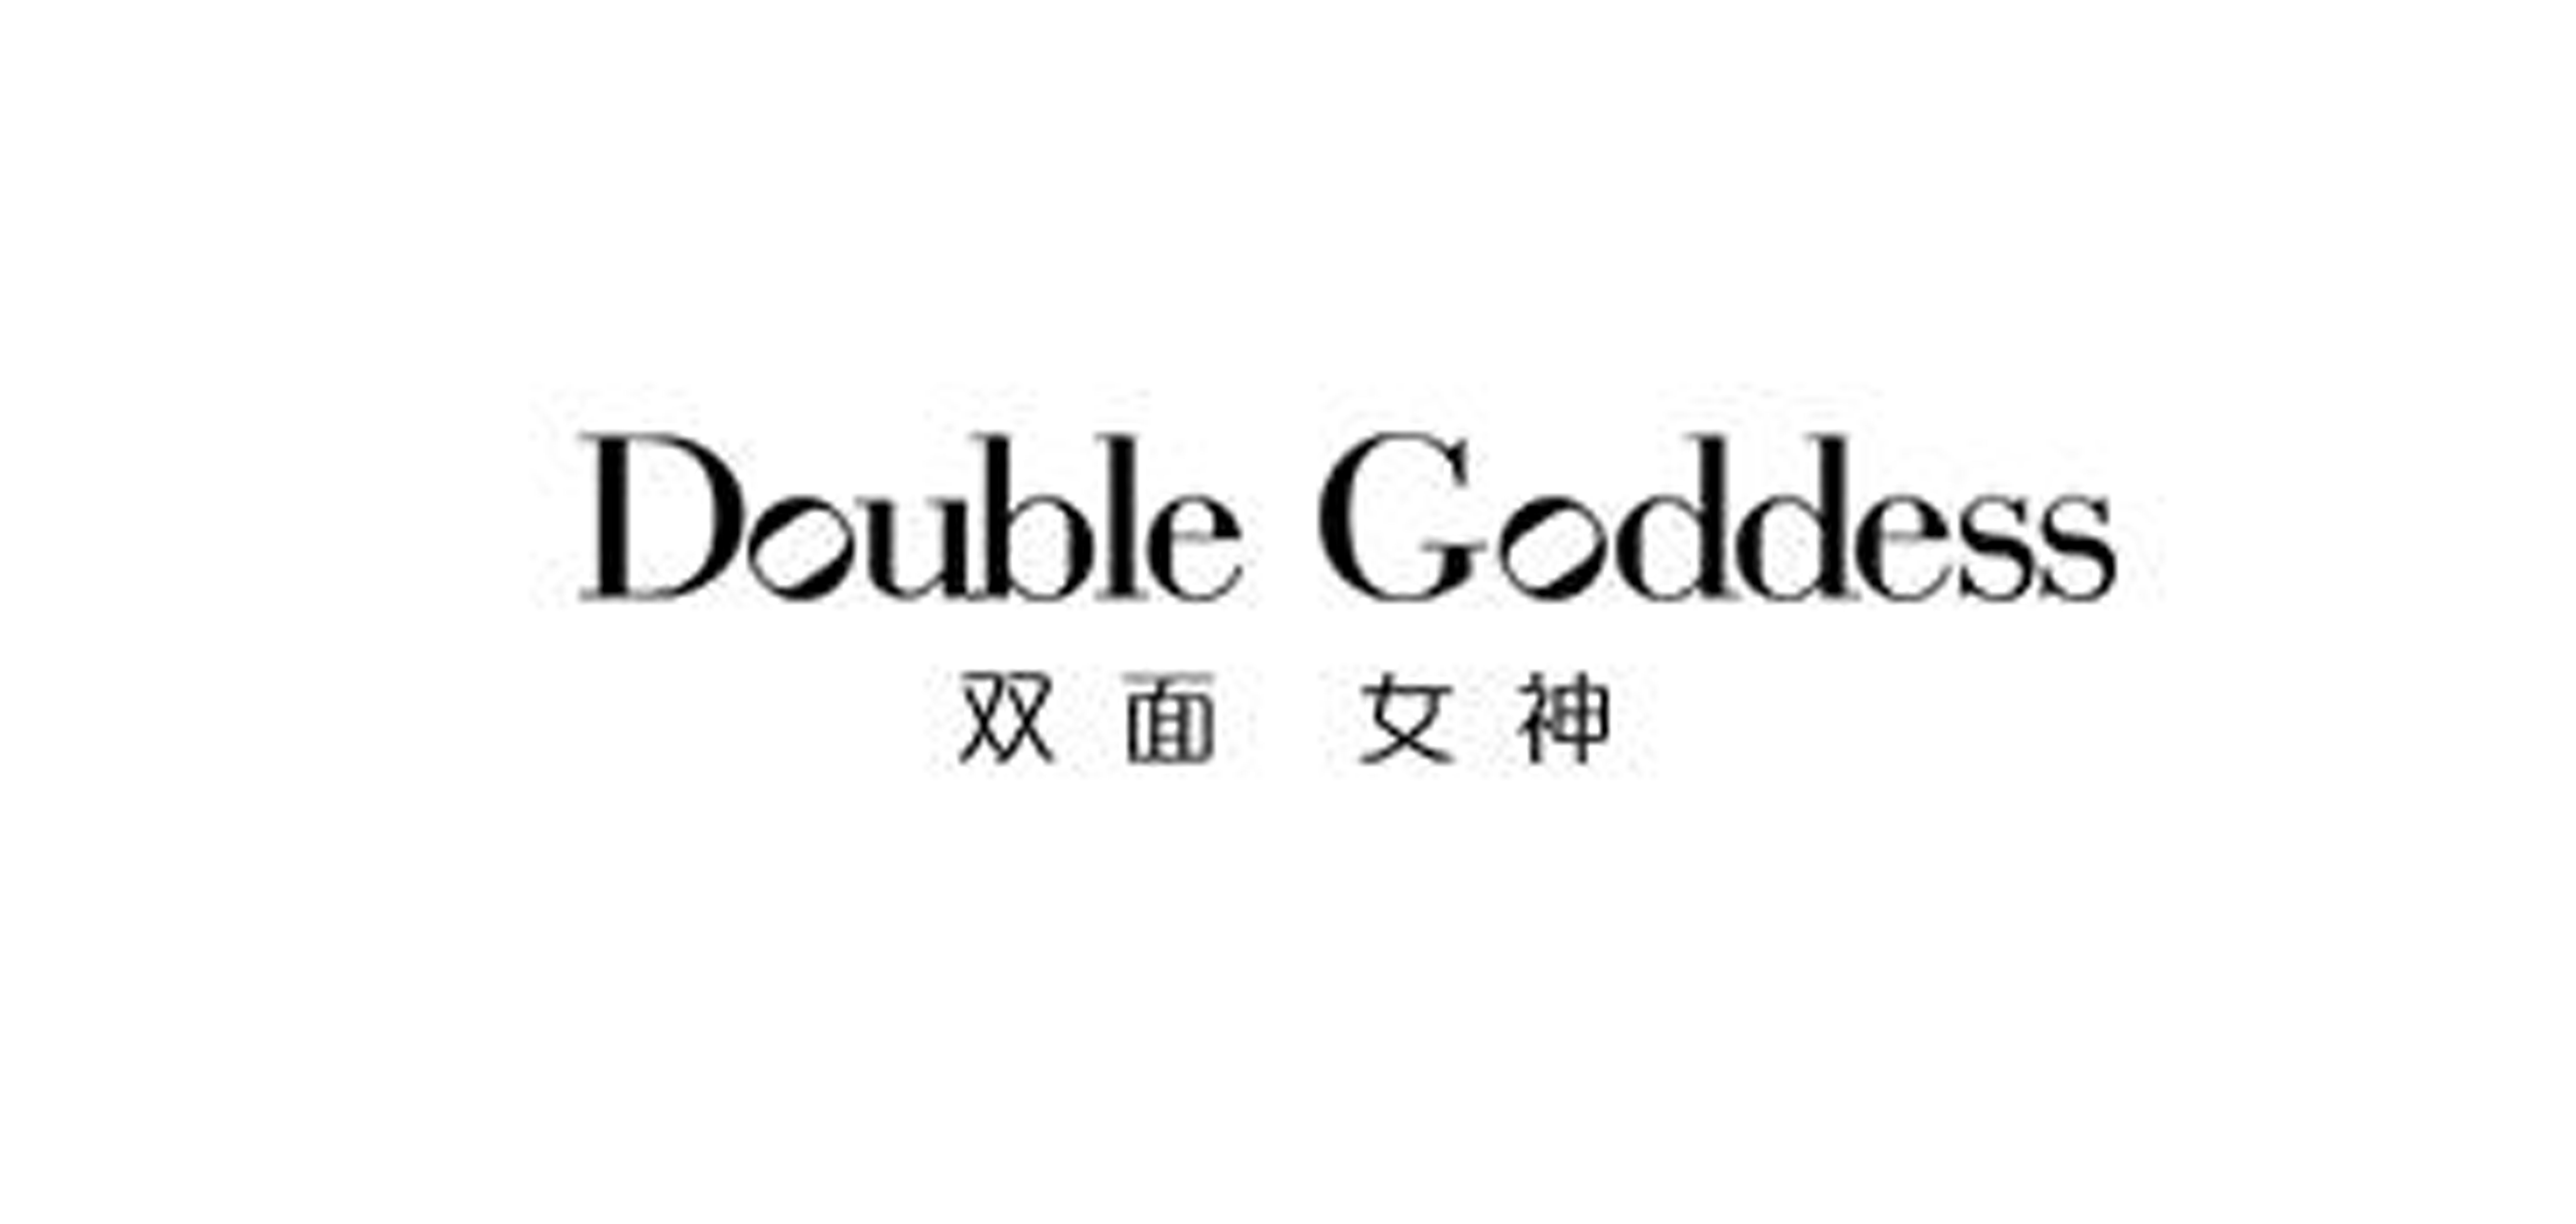 double goddess是什么牌子_双面女神品牌怎么样?